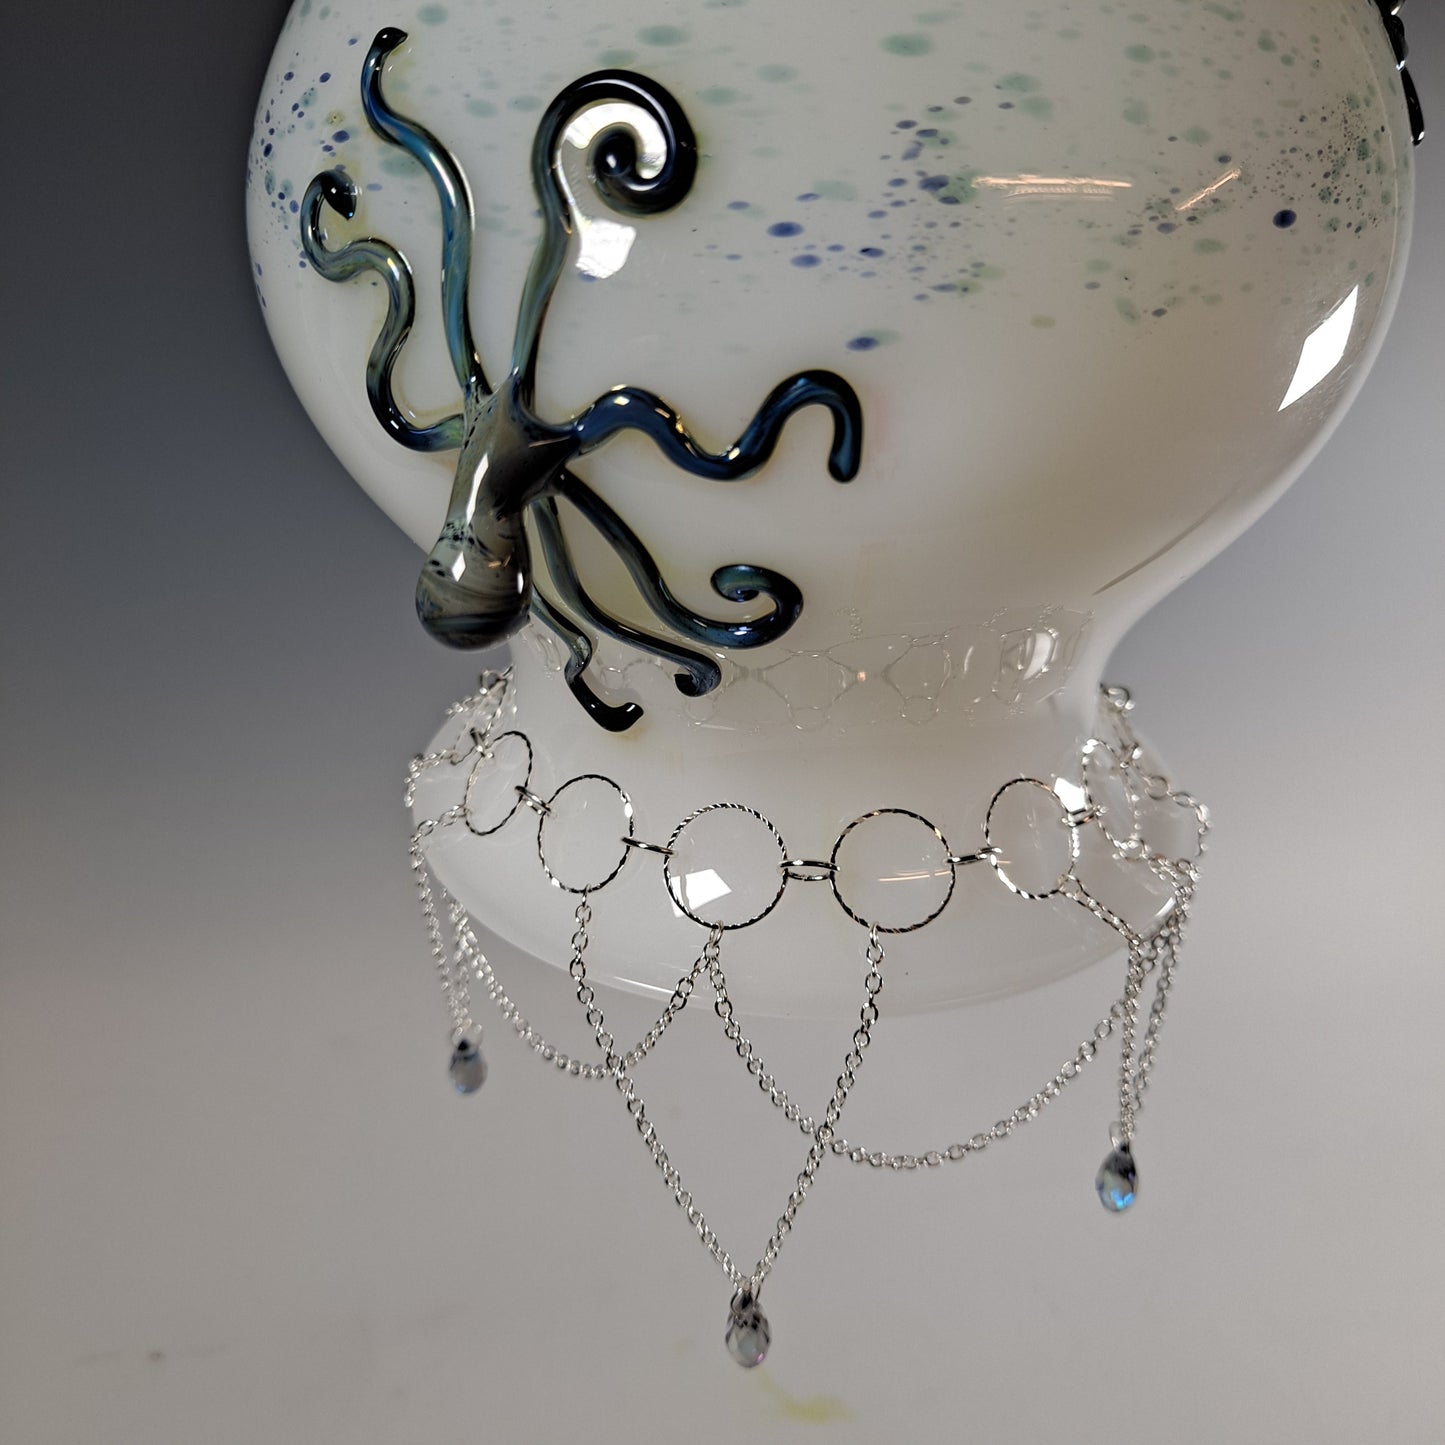 Glass Octopus Hanging Lamp